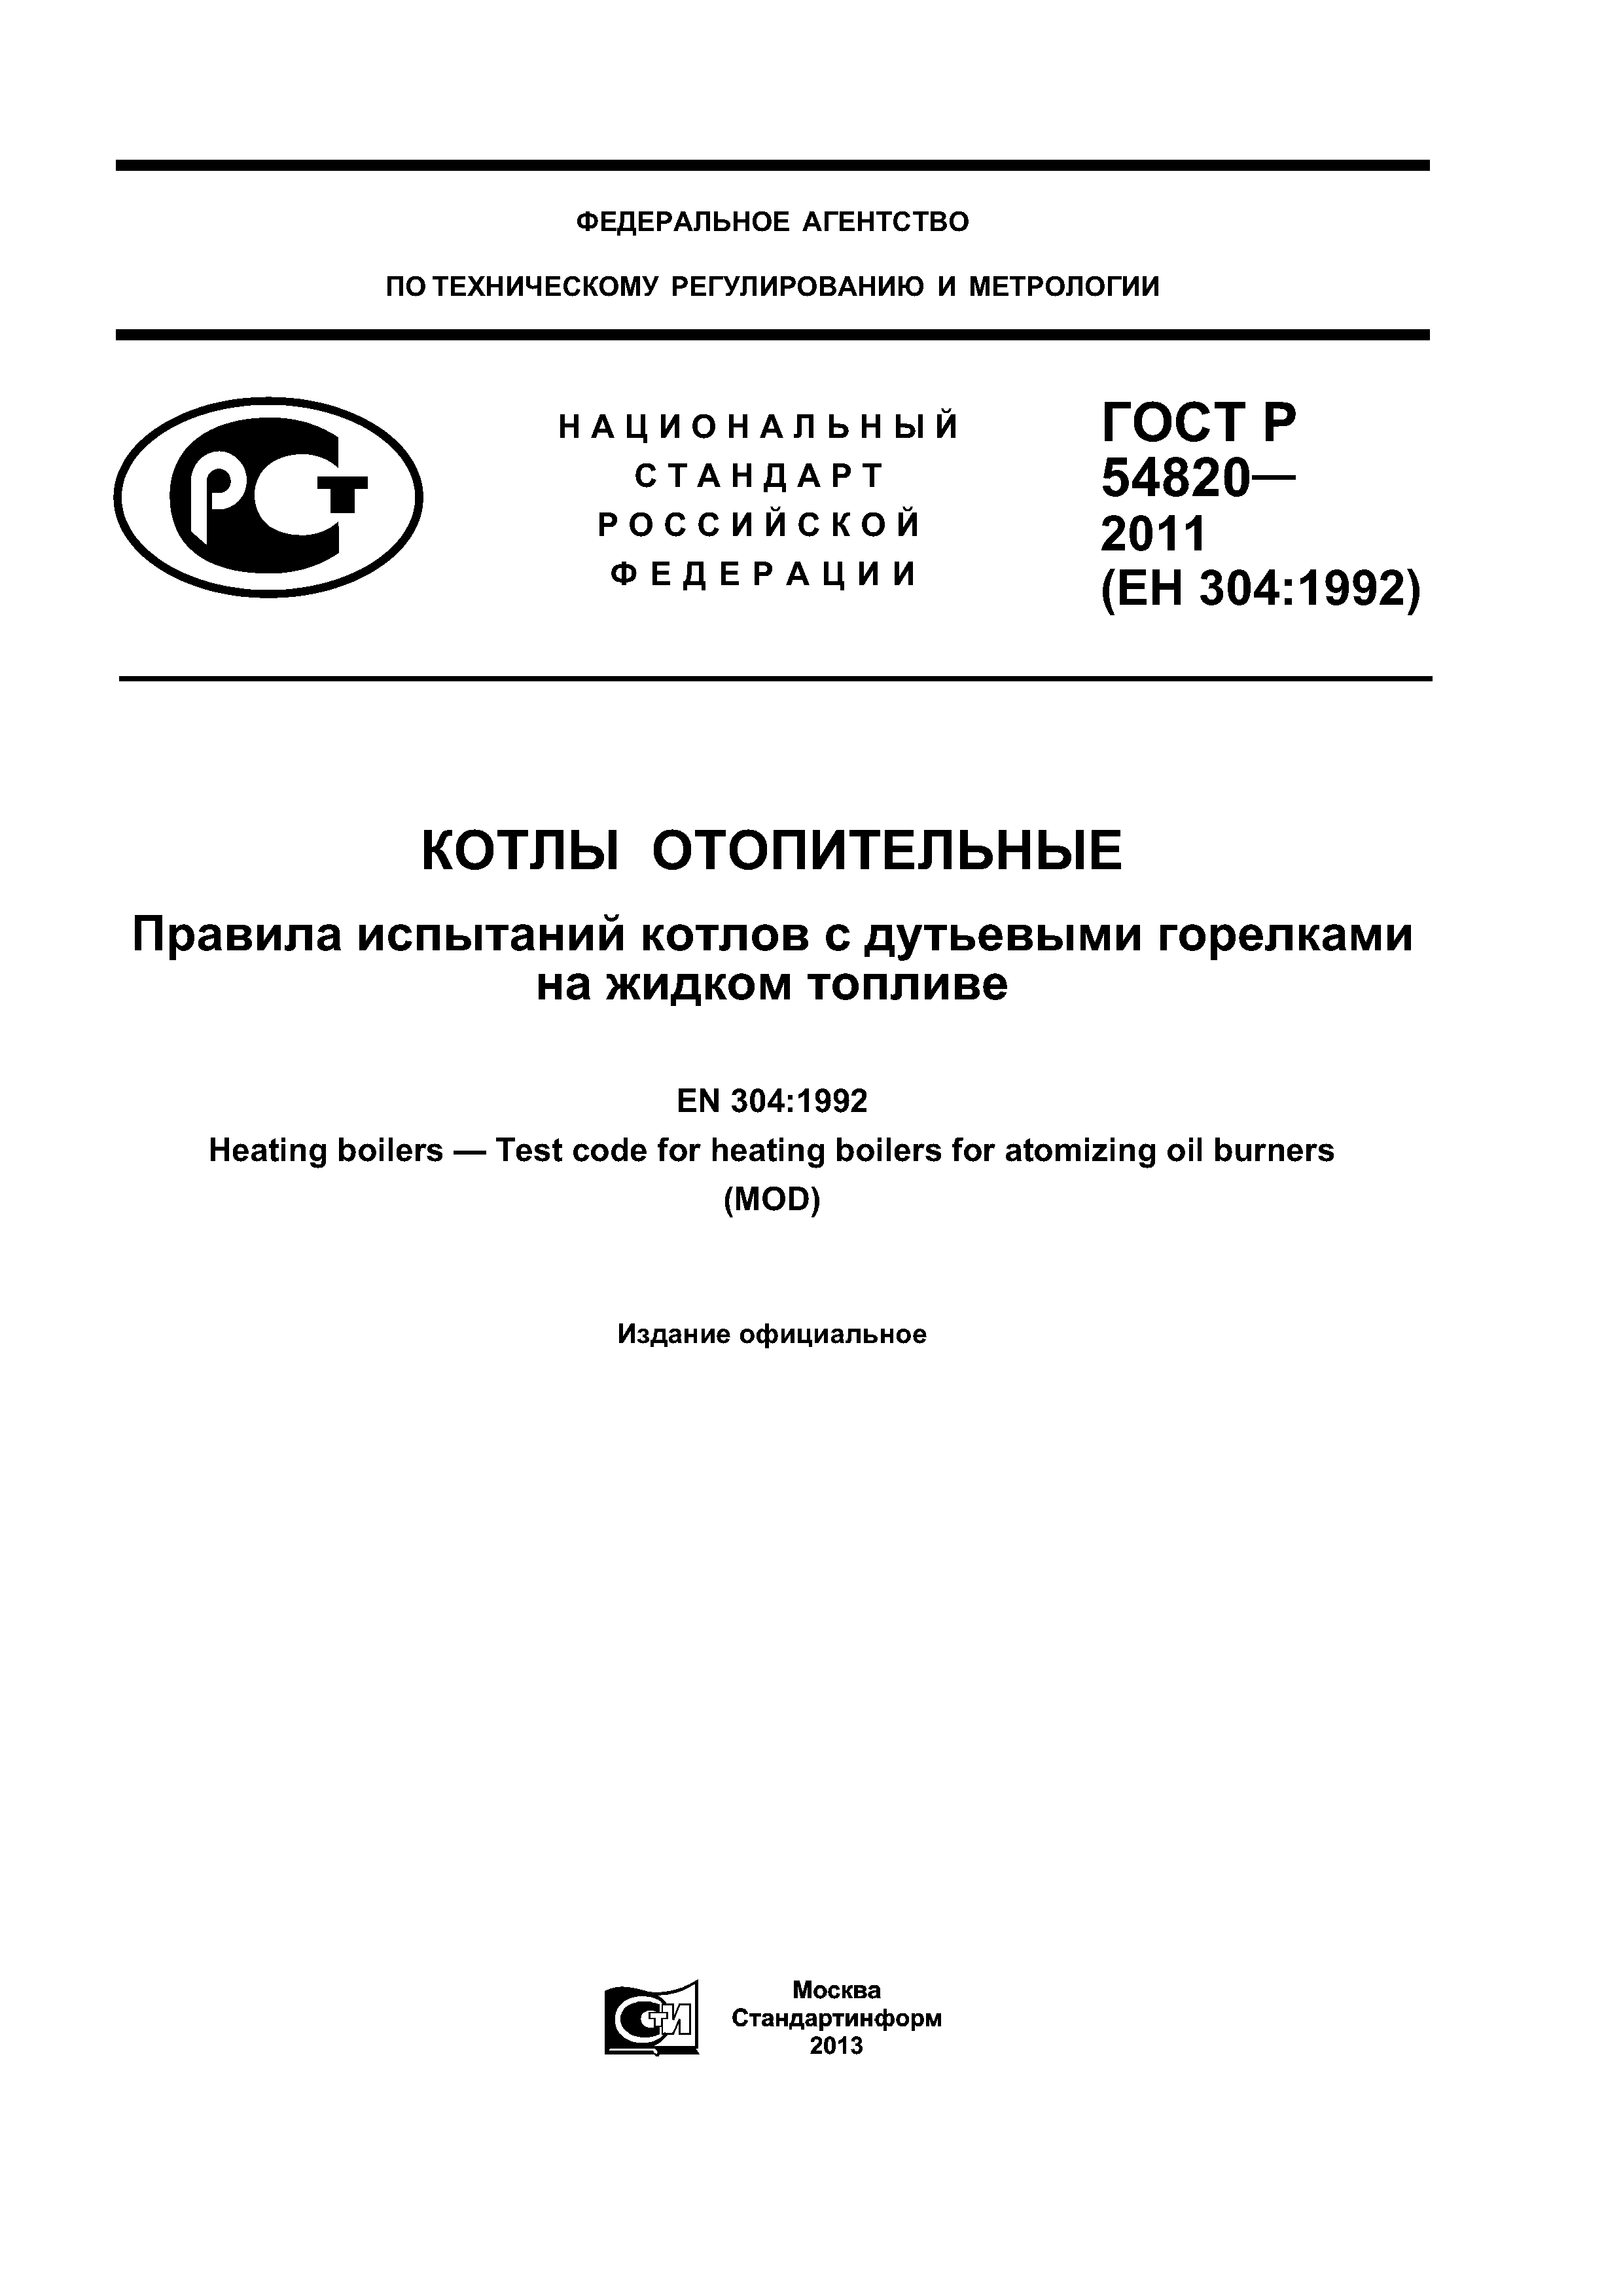 ГОСТ Р 54820-2011